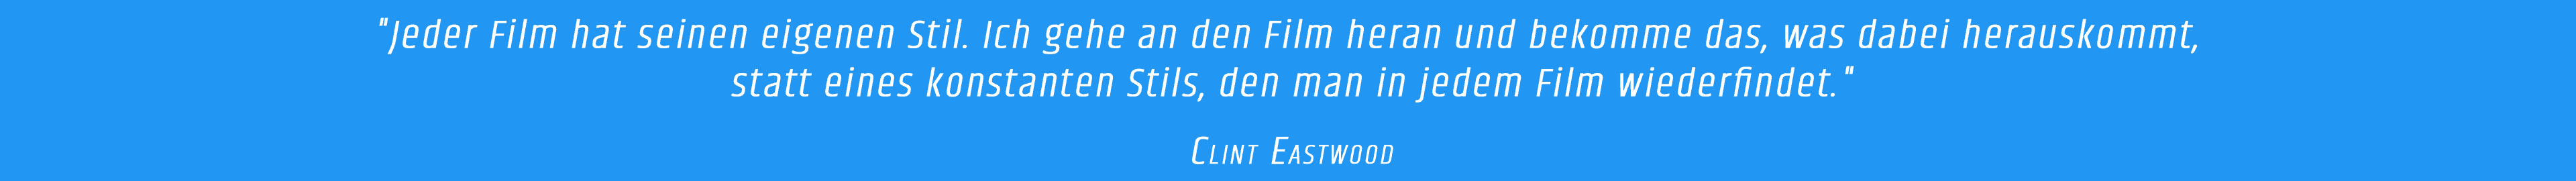 Zitat - Clint Eastwood